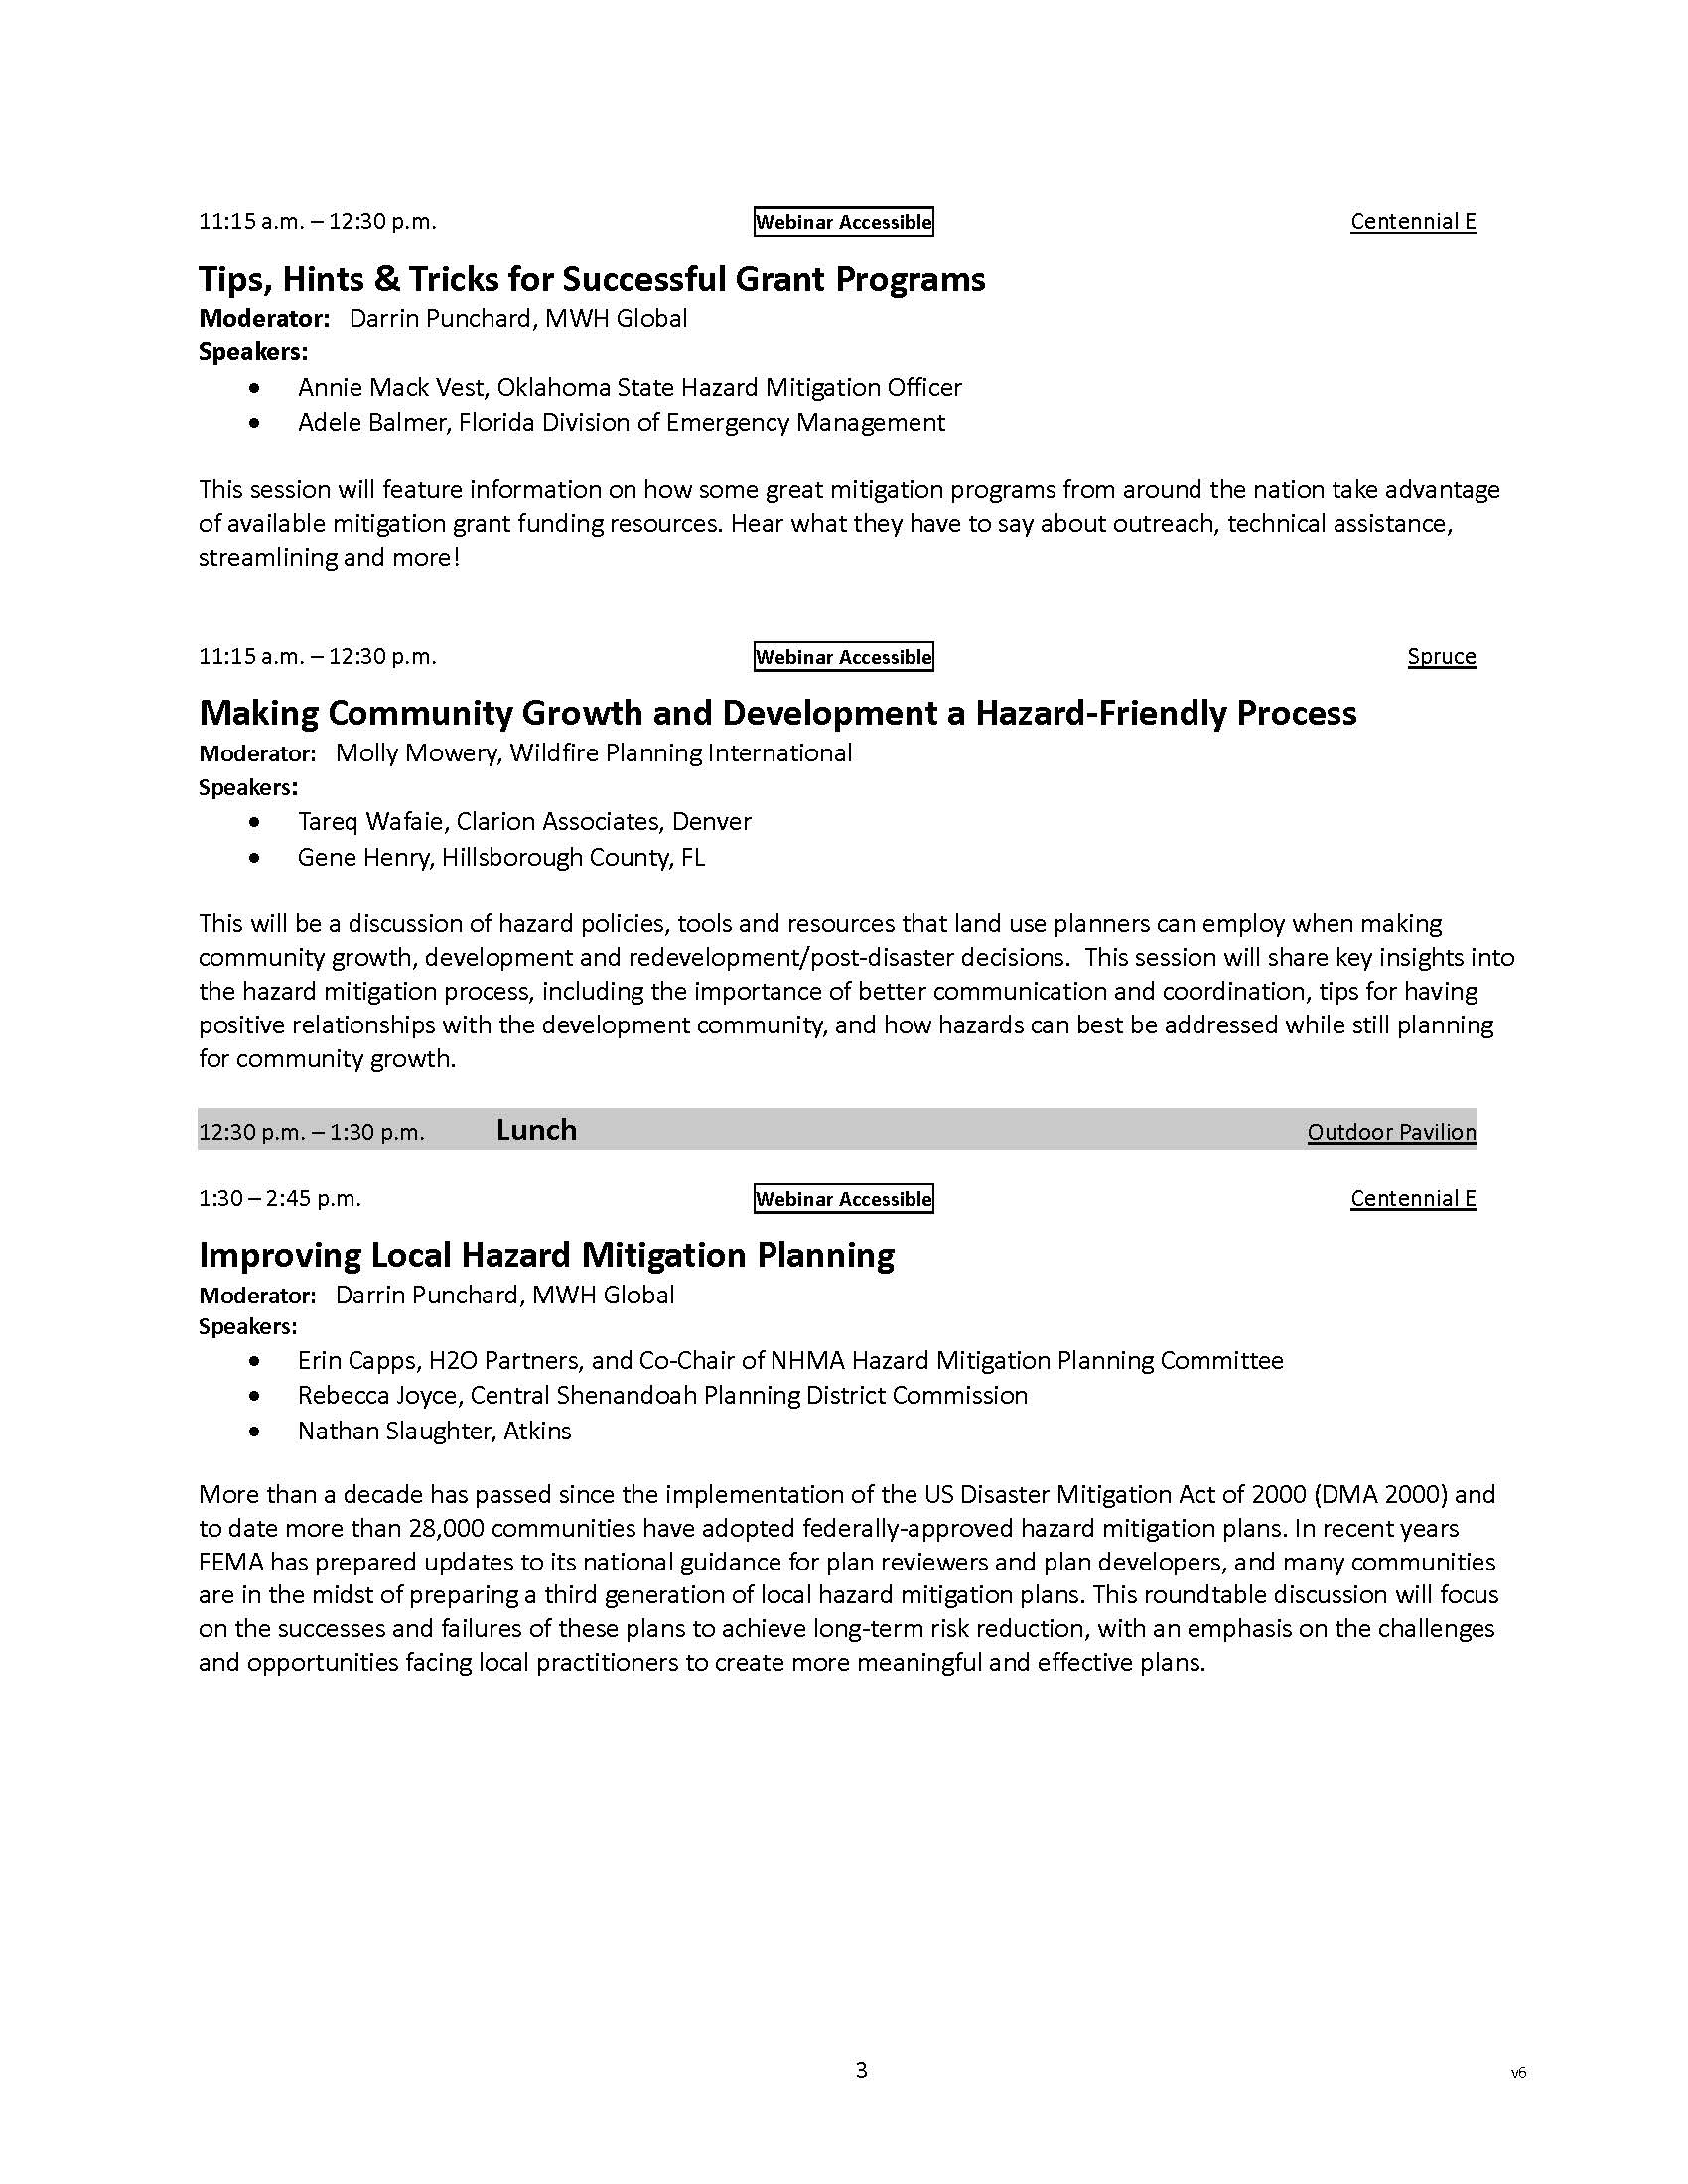 Program Agenda NHMA 2014 Symposium 5-26-14 v6_Page_3